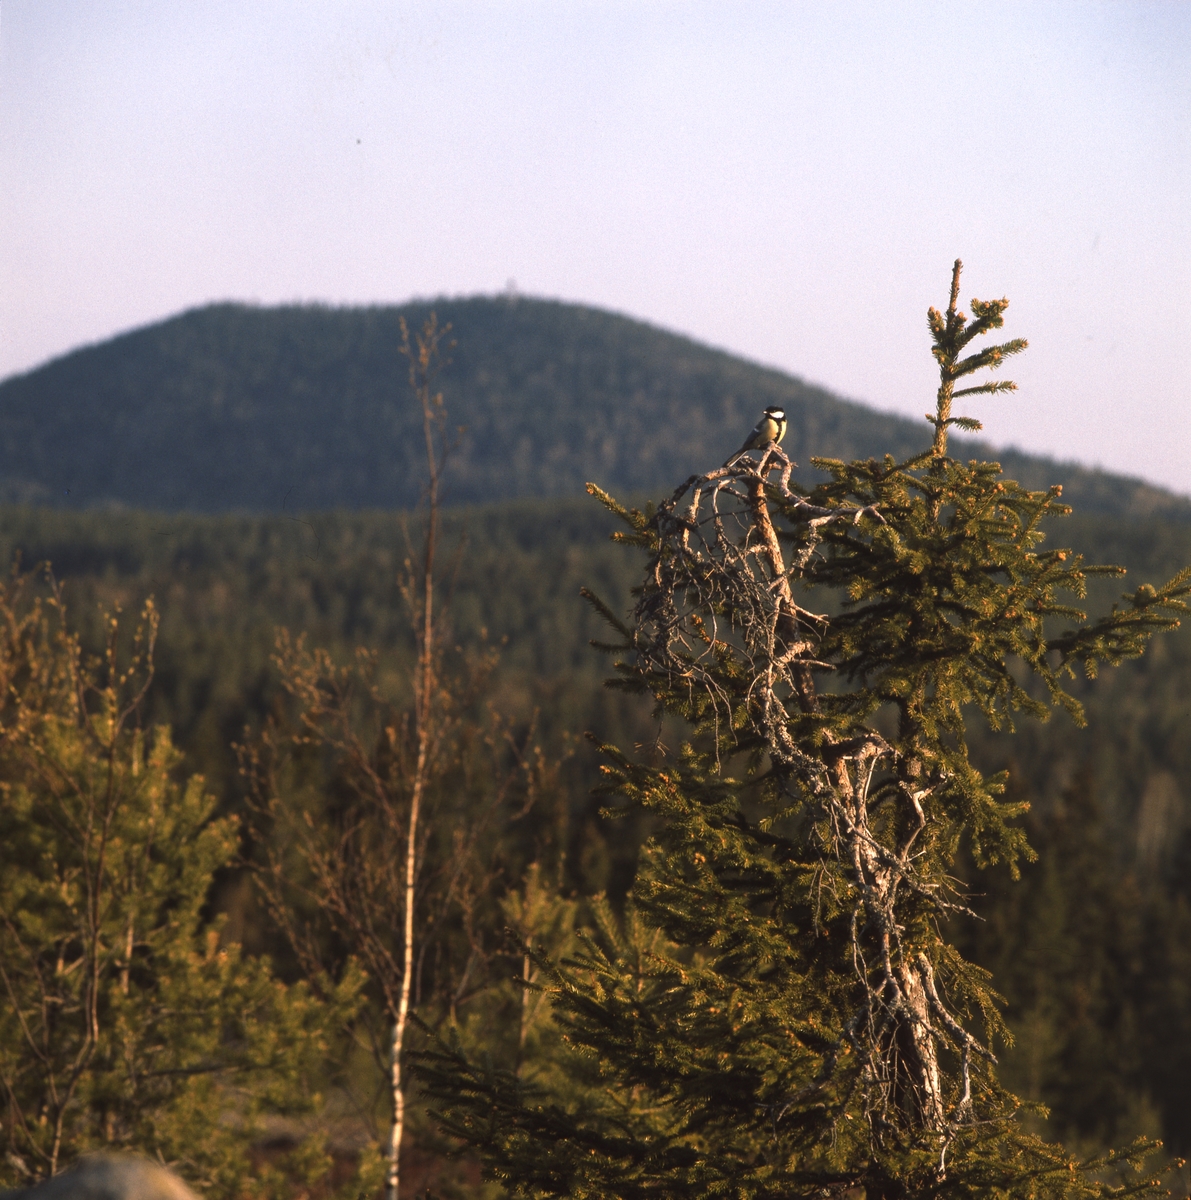 En talgoxe sitter på en torrake i blandskog och i bakgrunden skymtar ett berg.